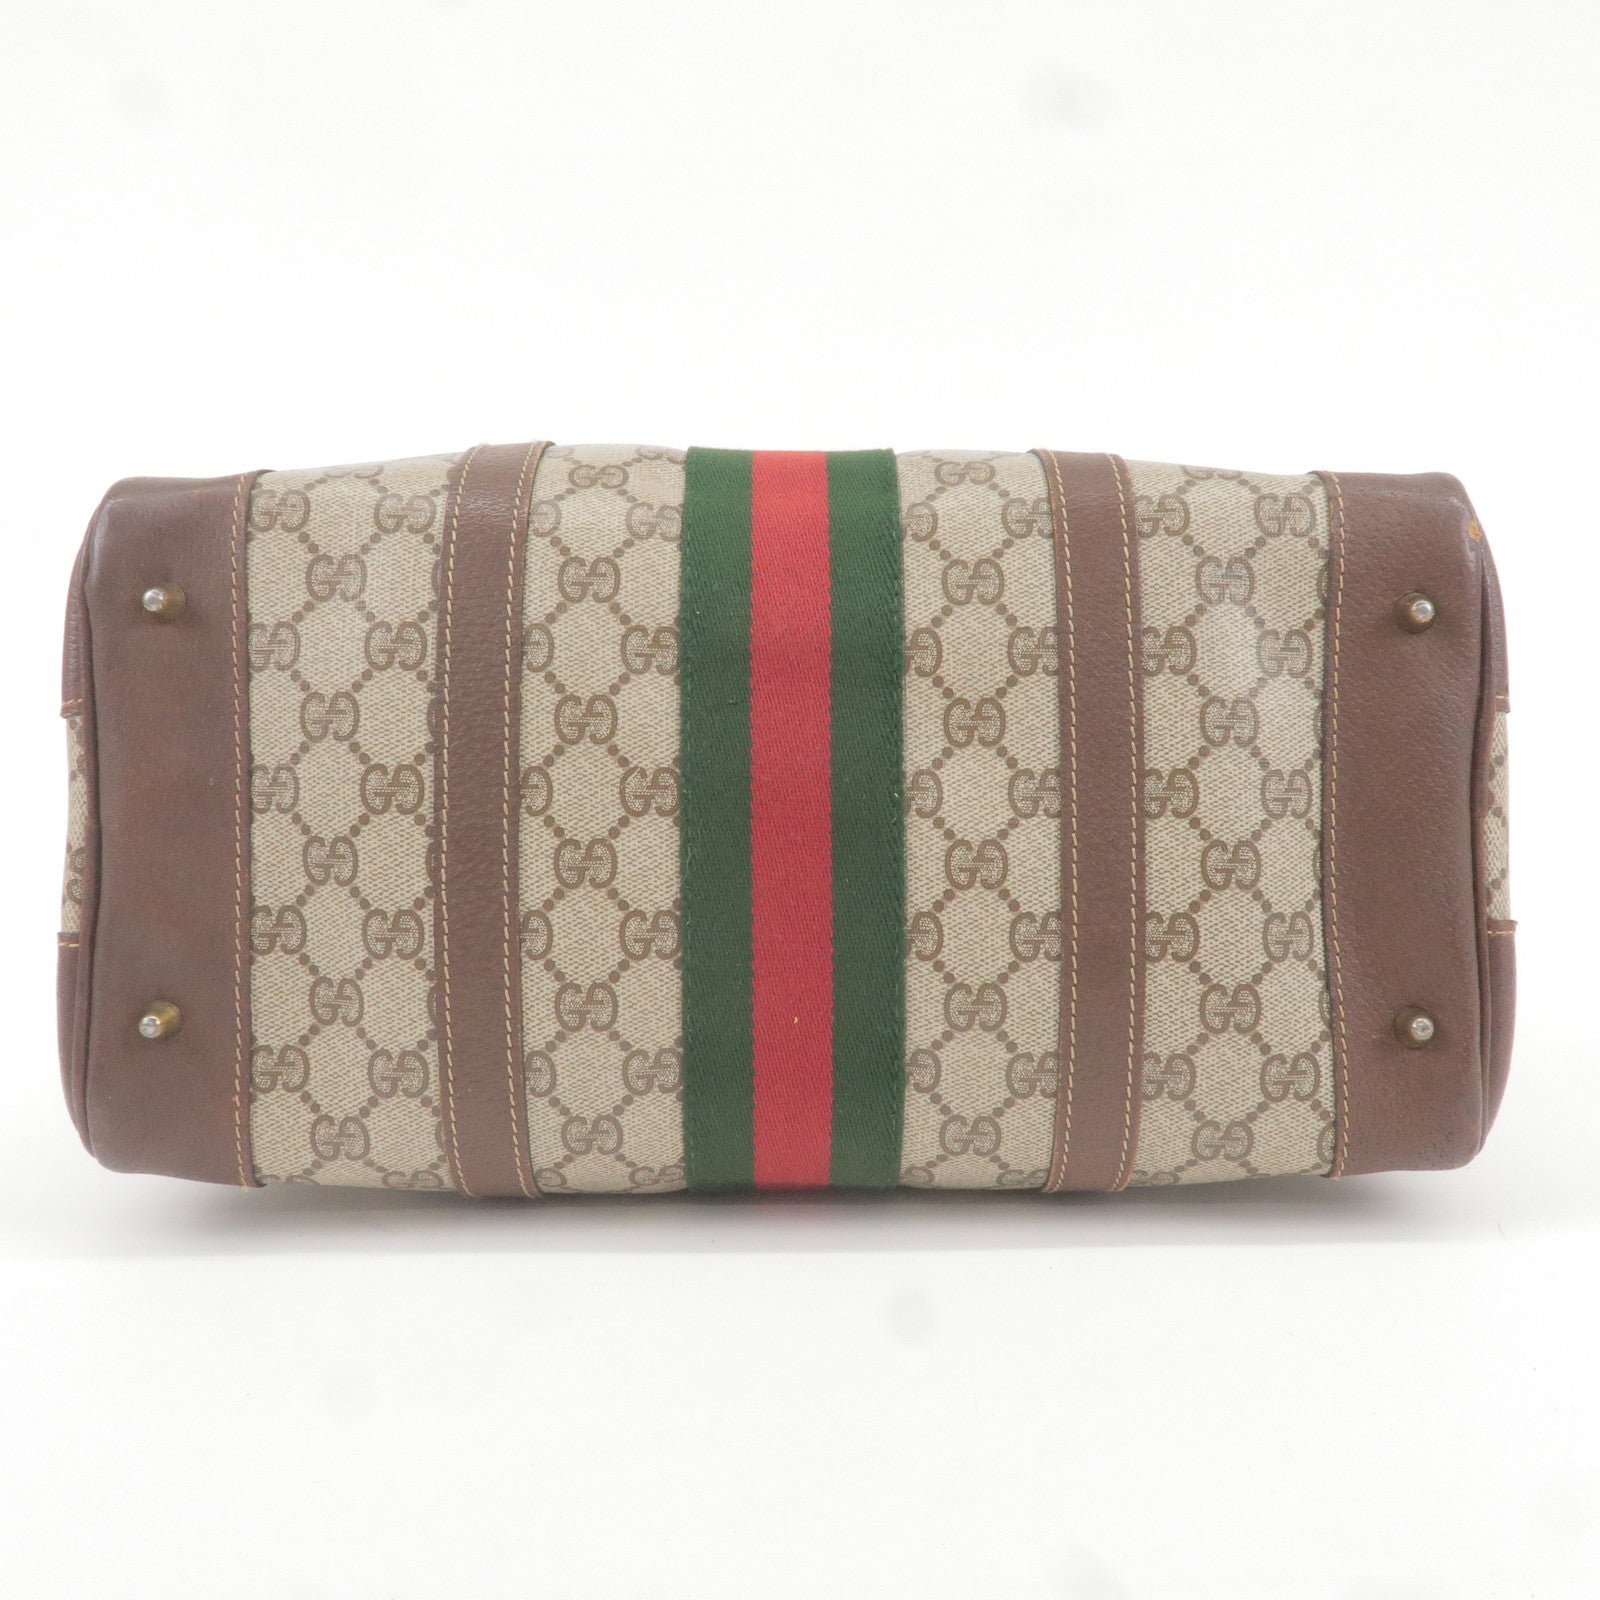 Gucci Original GG Canvas Boston Handbag